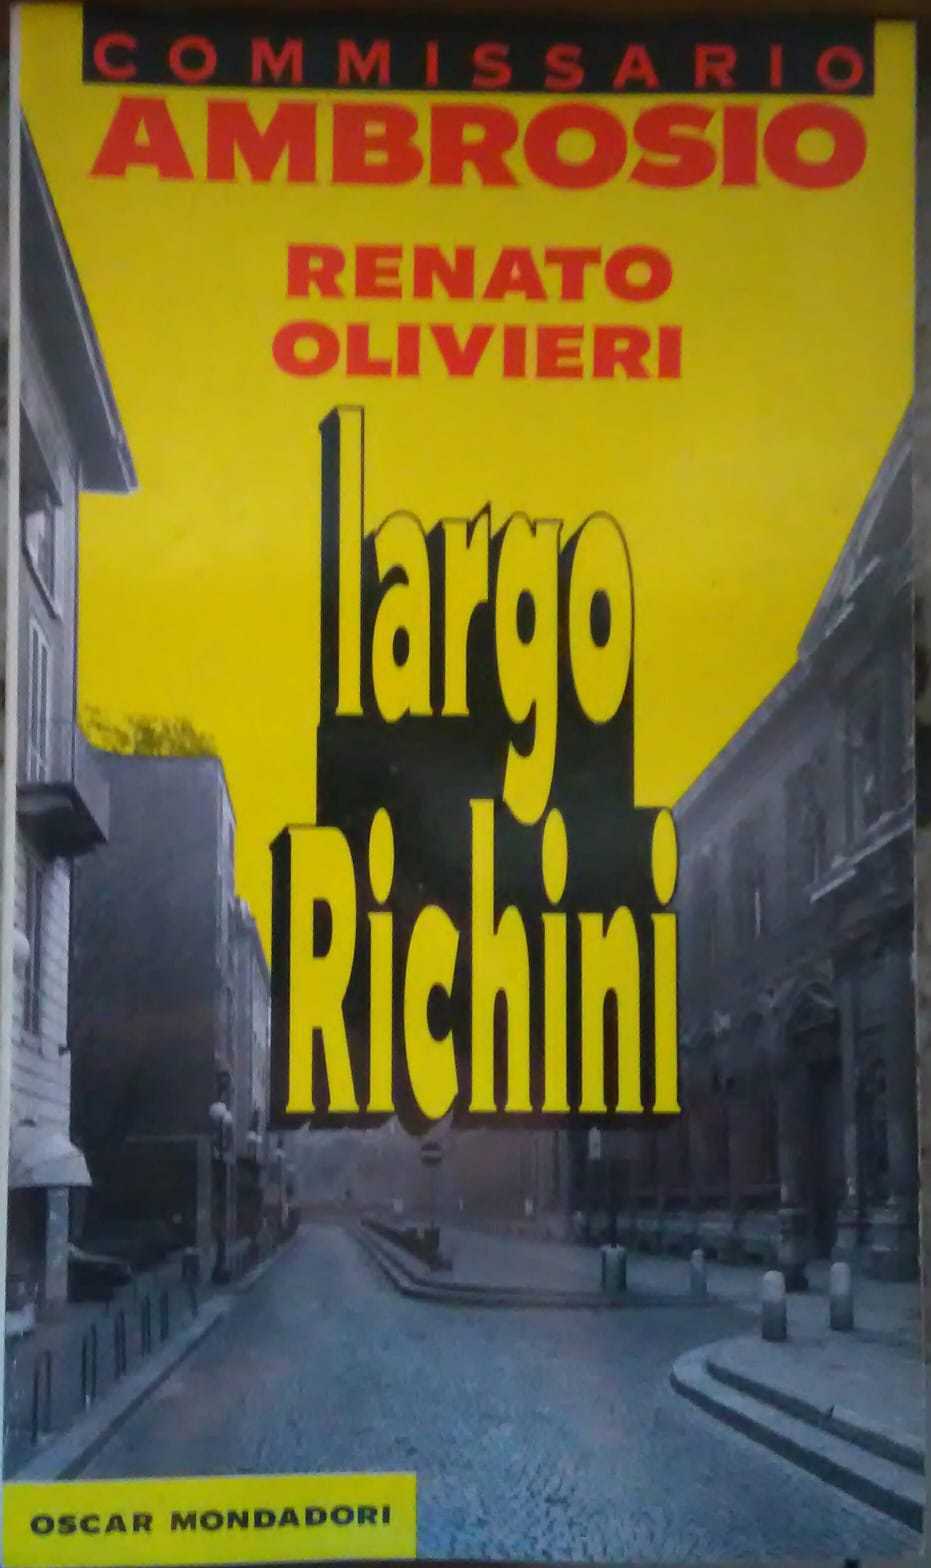 Commisario Ambrosio Largo Richini-Renato Olivieri,1993,Oscar Mondadori - S